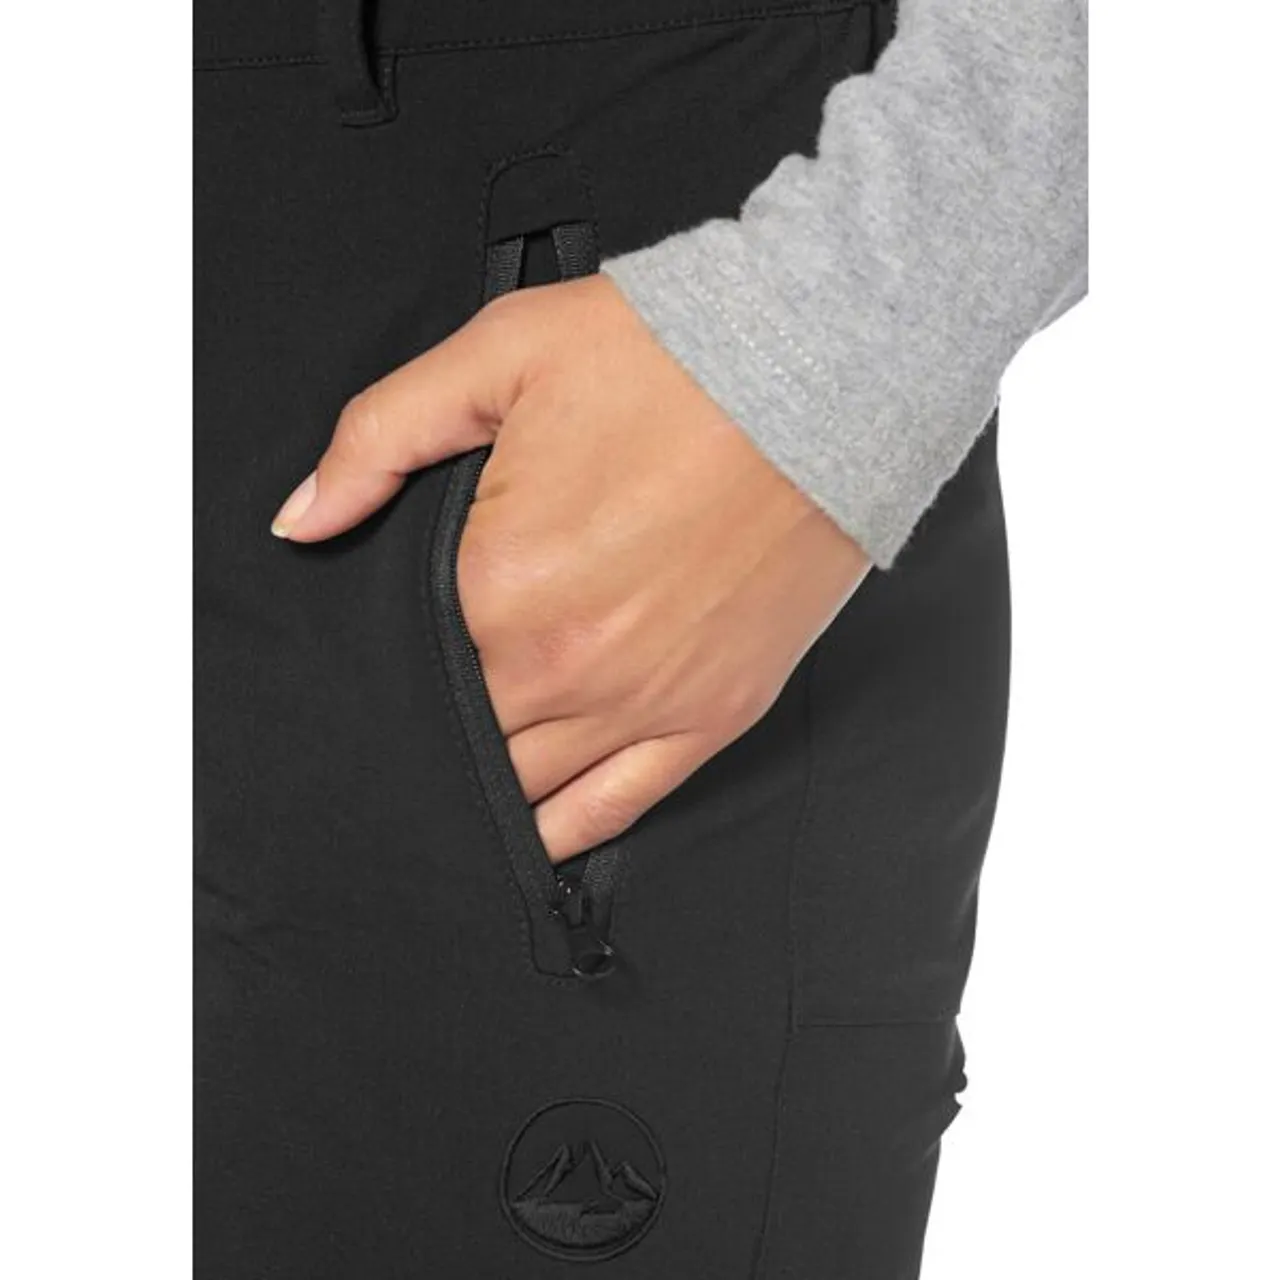 Funktionshose POLARINO Gr. 80, L-Gr, schwarz (schwarz (funktionshose aus nachhaltigem material)) Damen Hosen Funktionshosen